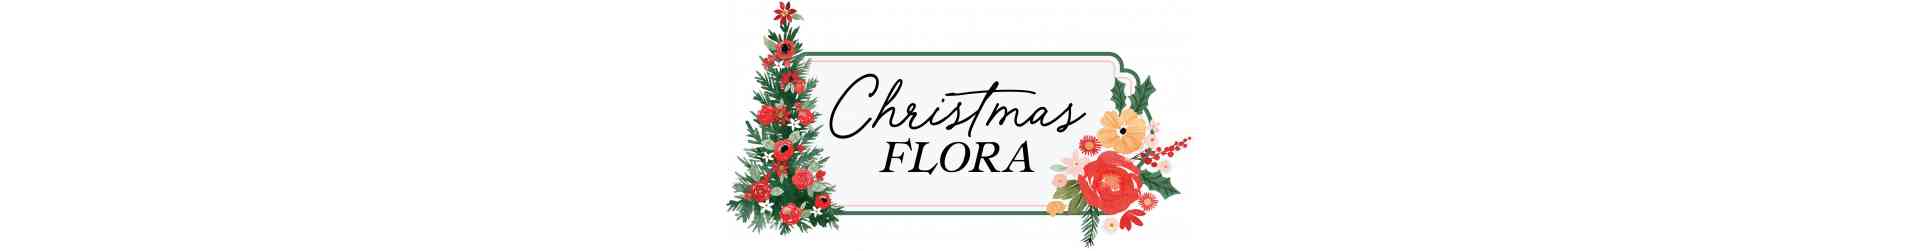 Joyful Christmas Flora